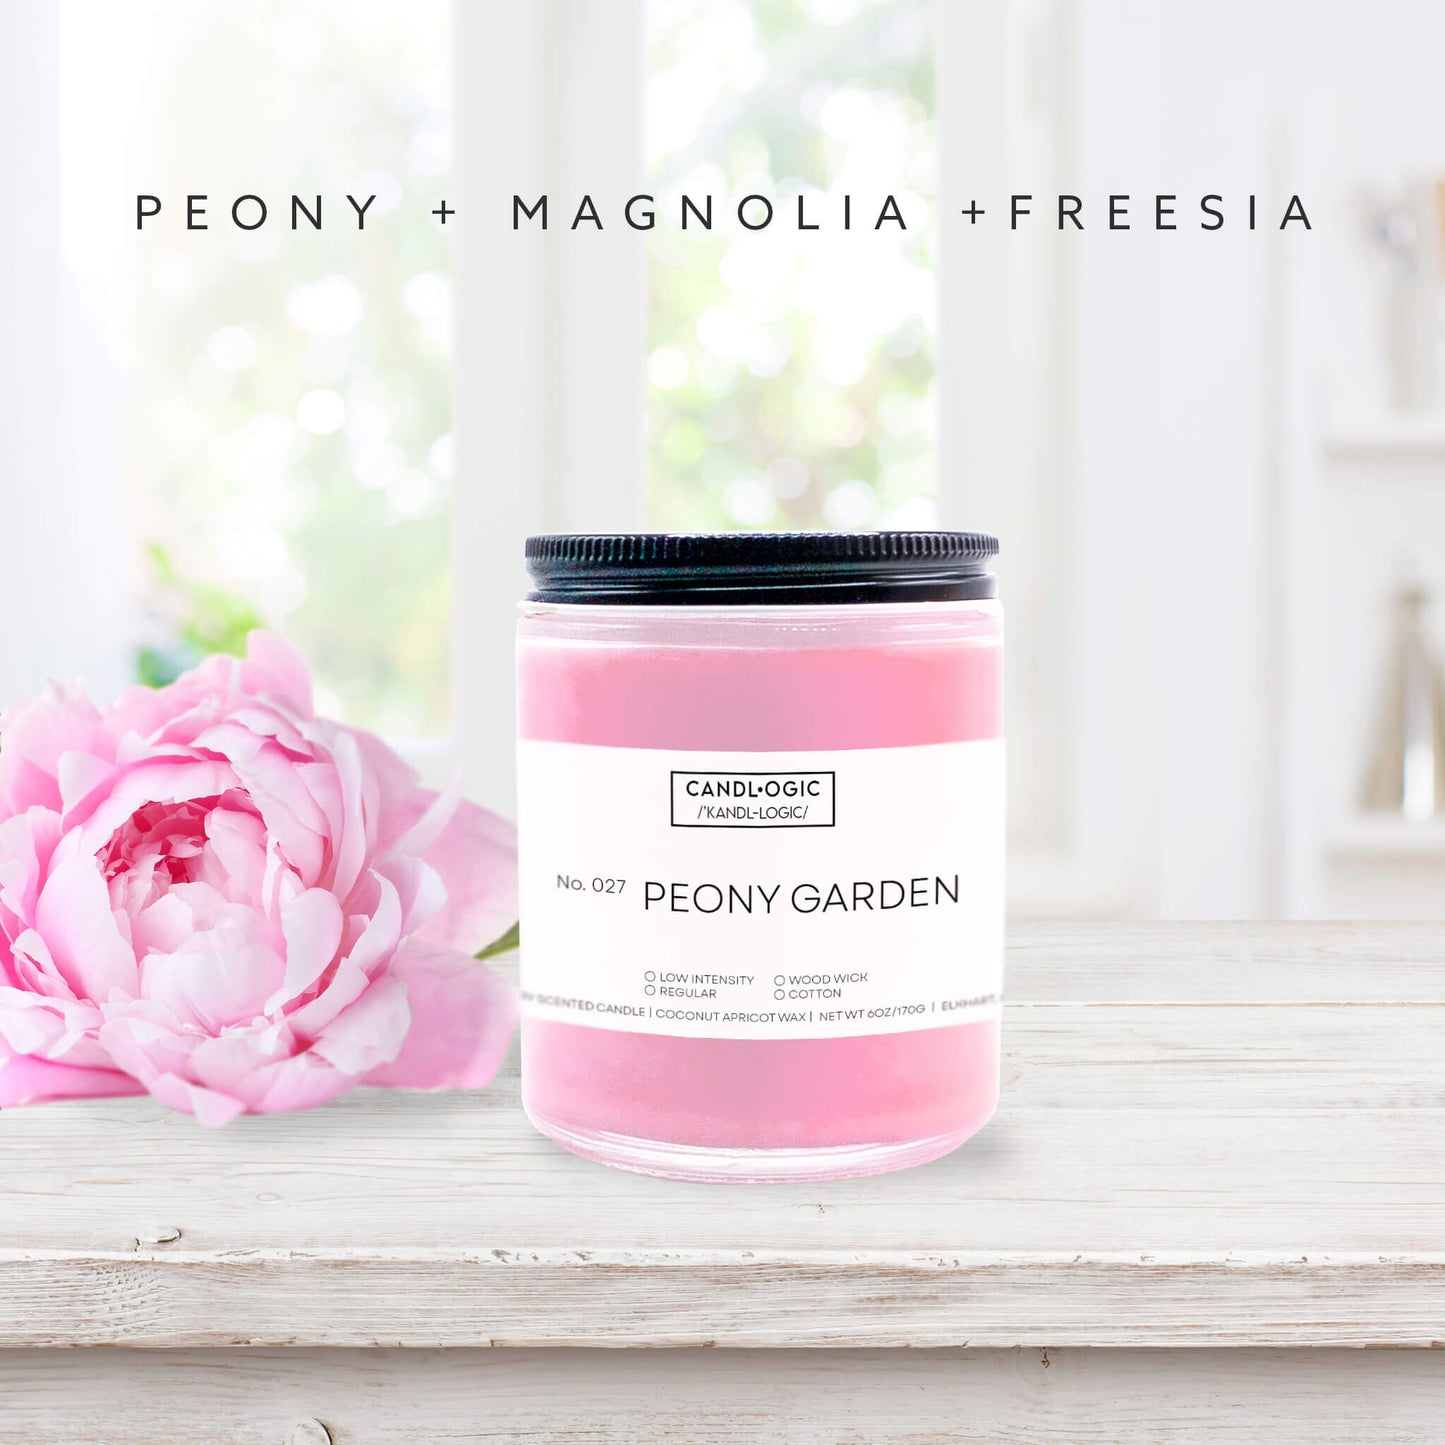 No. 027 Peony Garden candle - Peony, Magnolia & Freesia